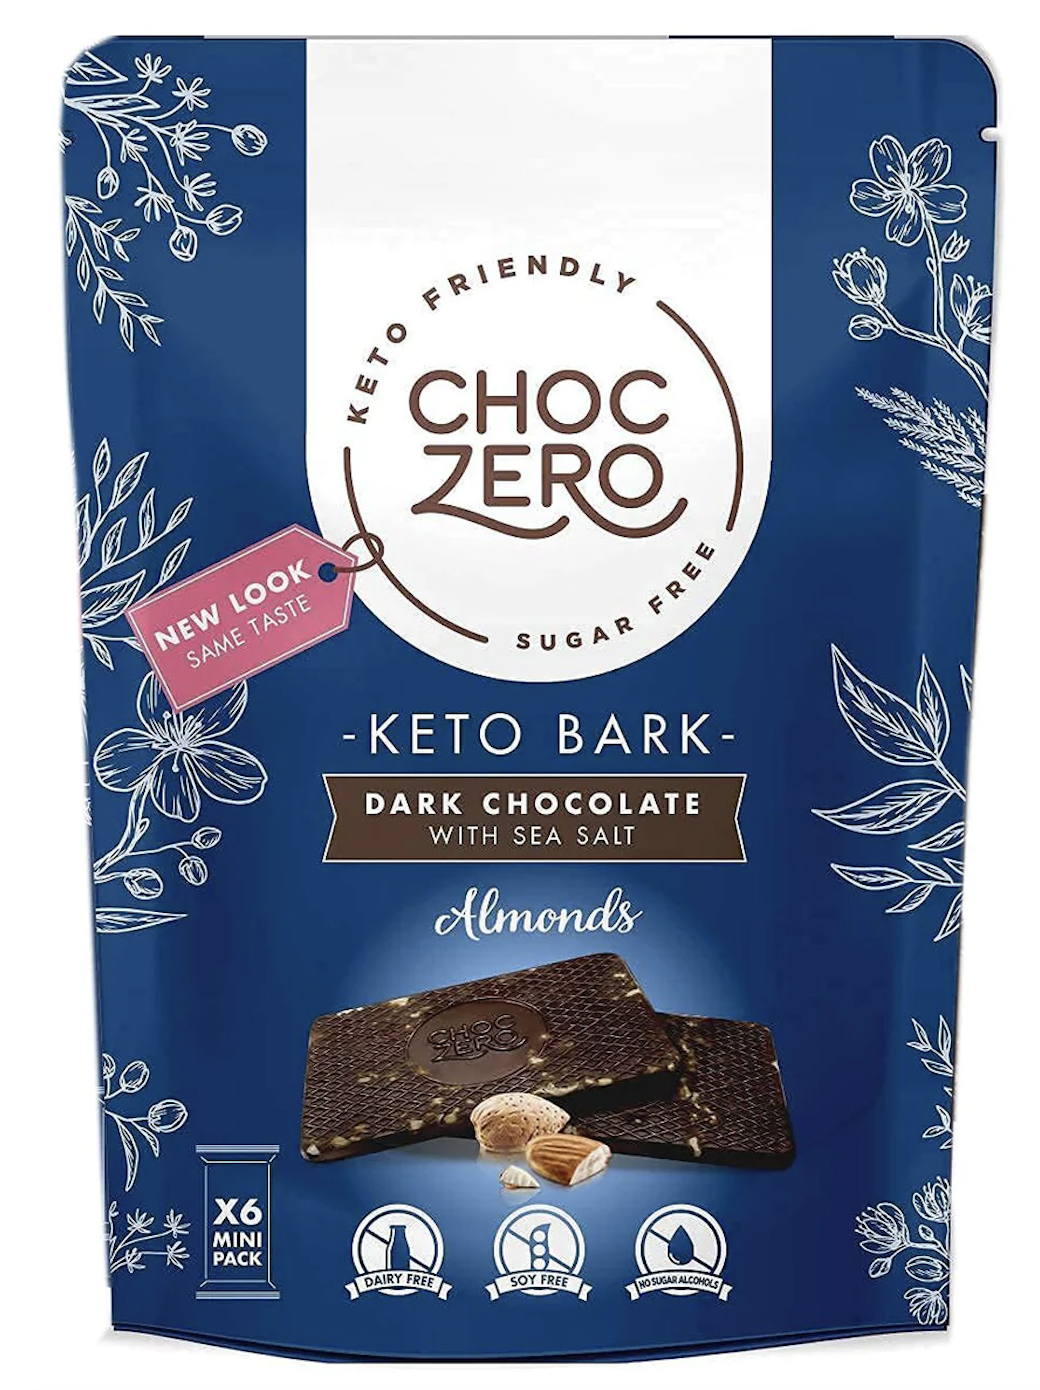 TÚI SOCOLA ĐEN BỌC HẠNH NHÂN ChocZero's Dark Chocolate Almond Keto Bark, Sugar Free, Low Carb, 170g